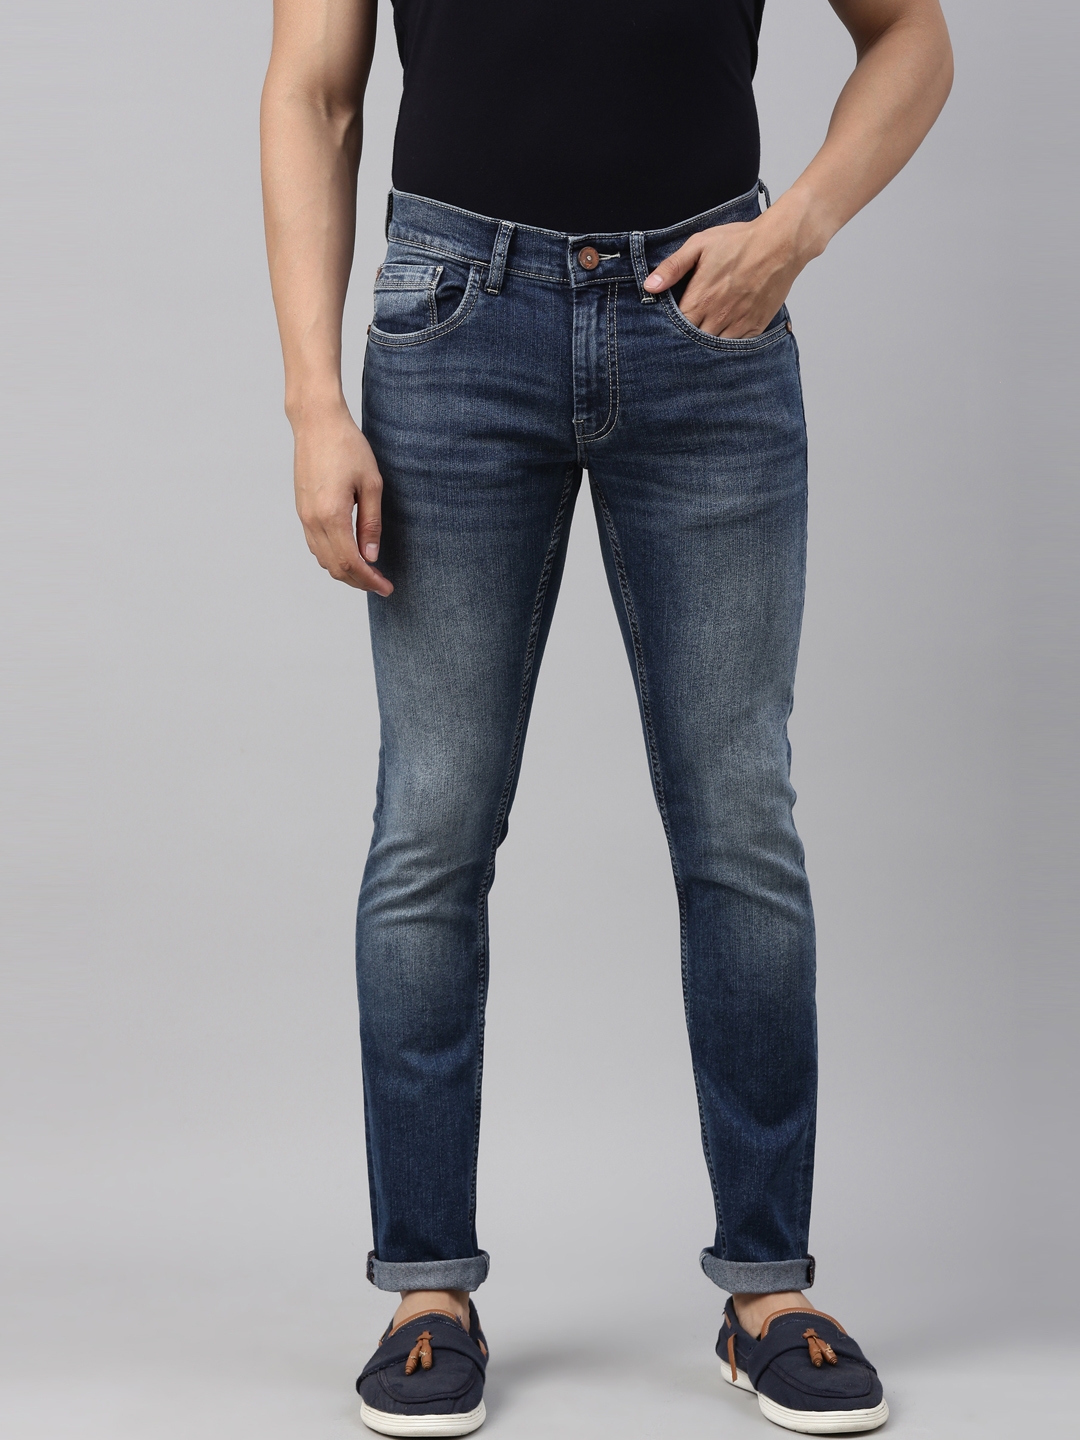 American Bull | American Bull Mens Denim Jeans With 5 Pockets 0